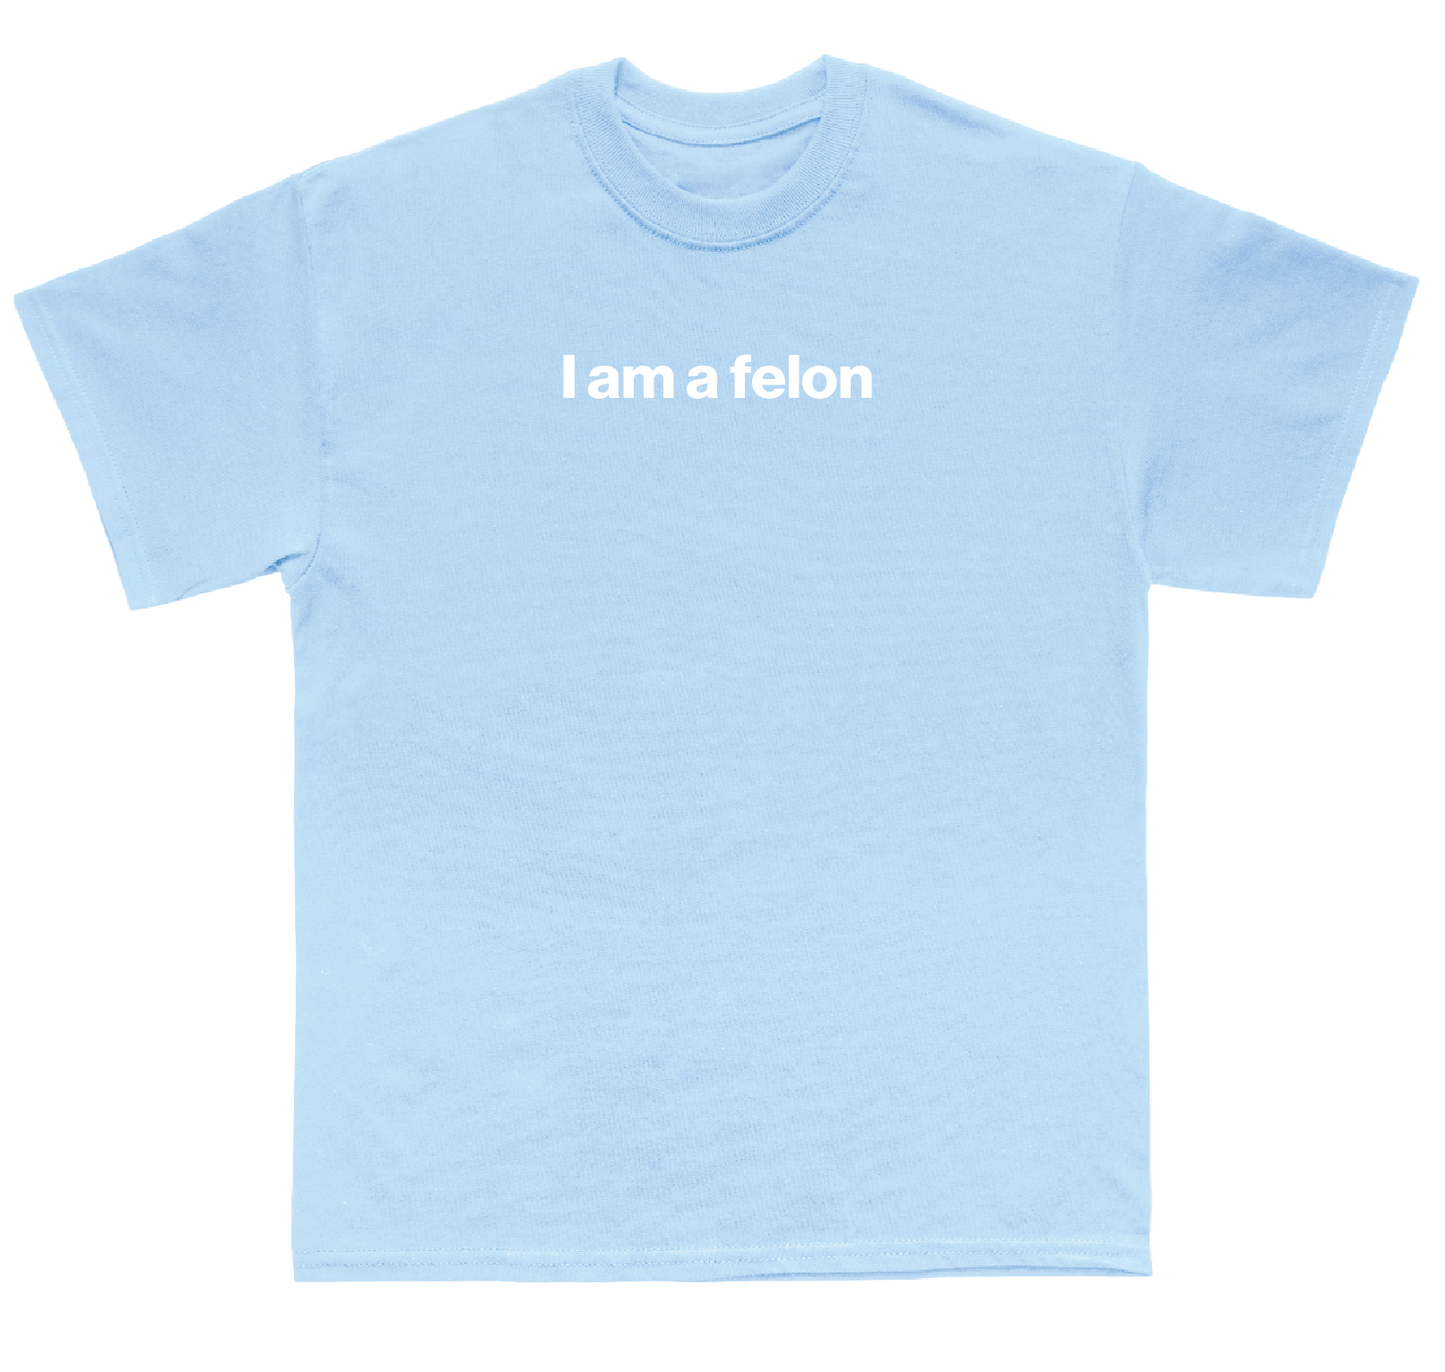 I am a felon shirt